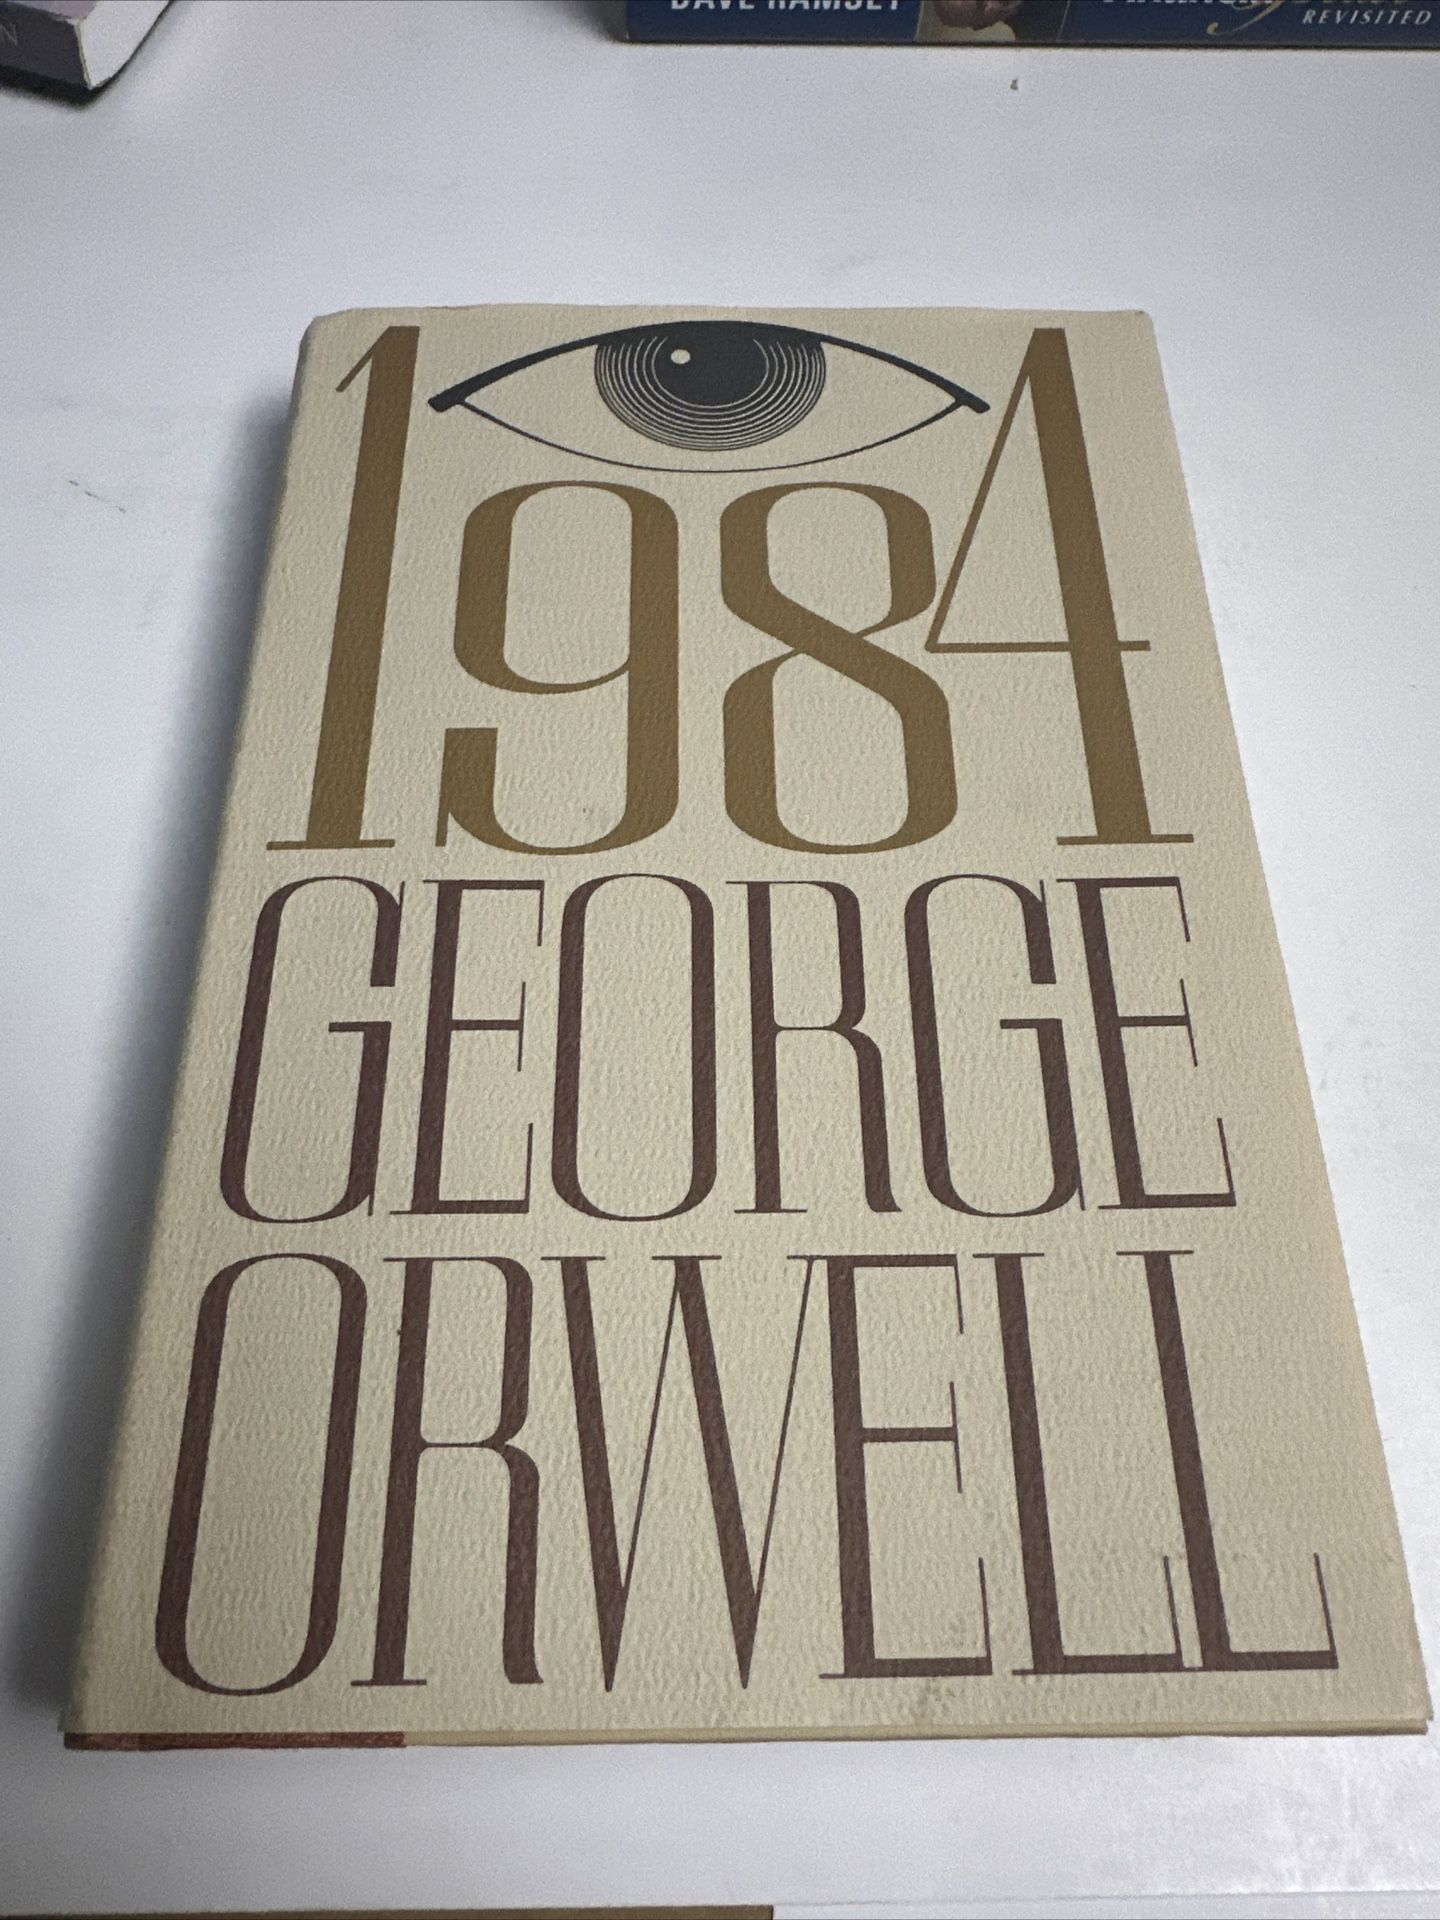 1984 George Orwell Rare Edition 